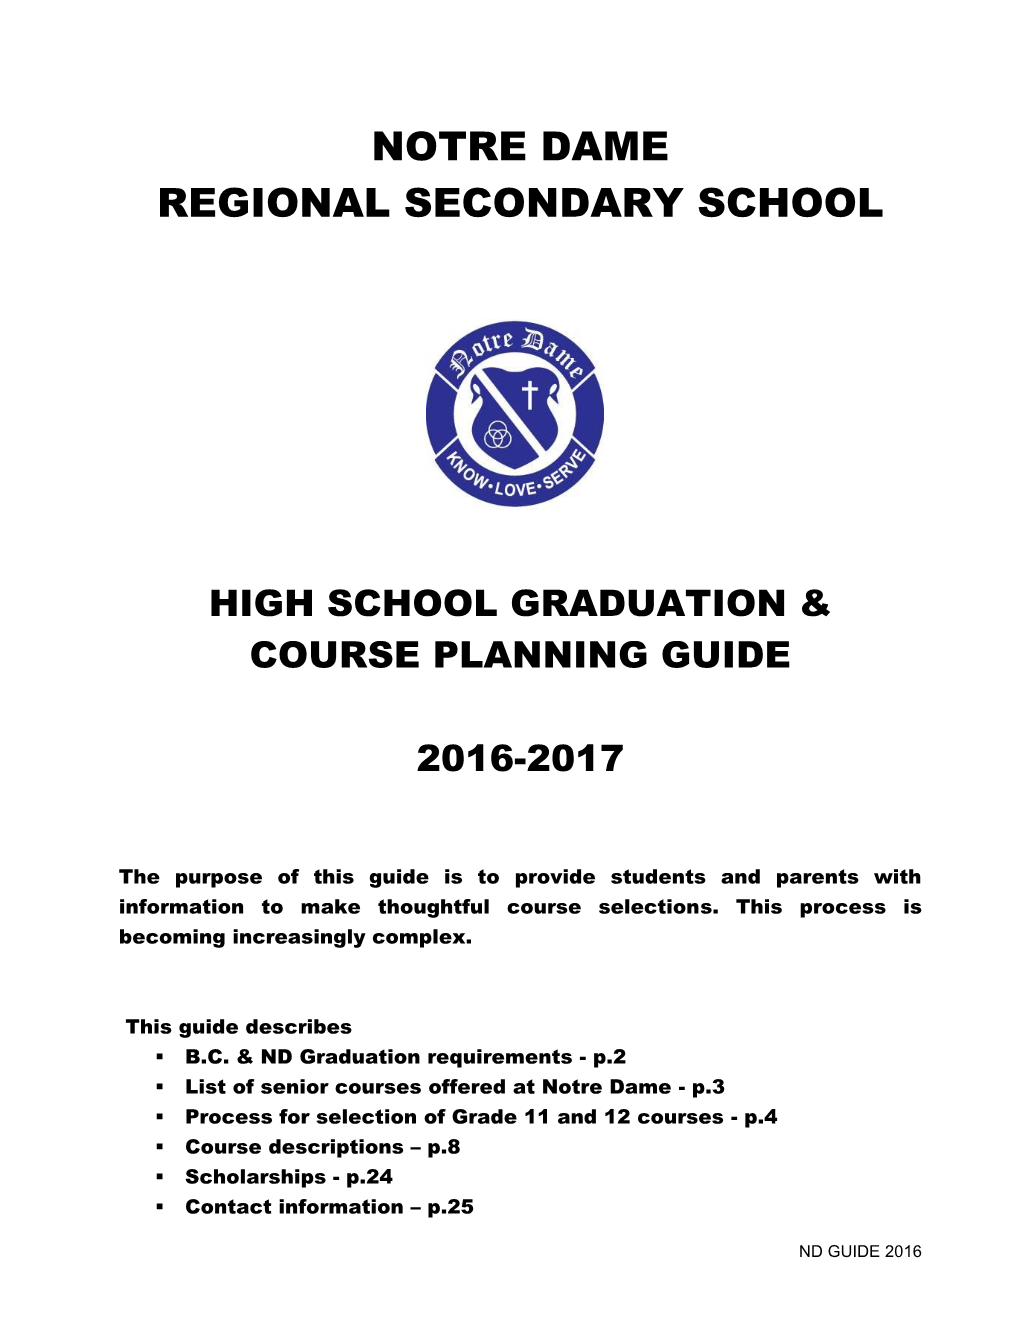 High School Graduation & Course Planning Guide 2016-2017